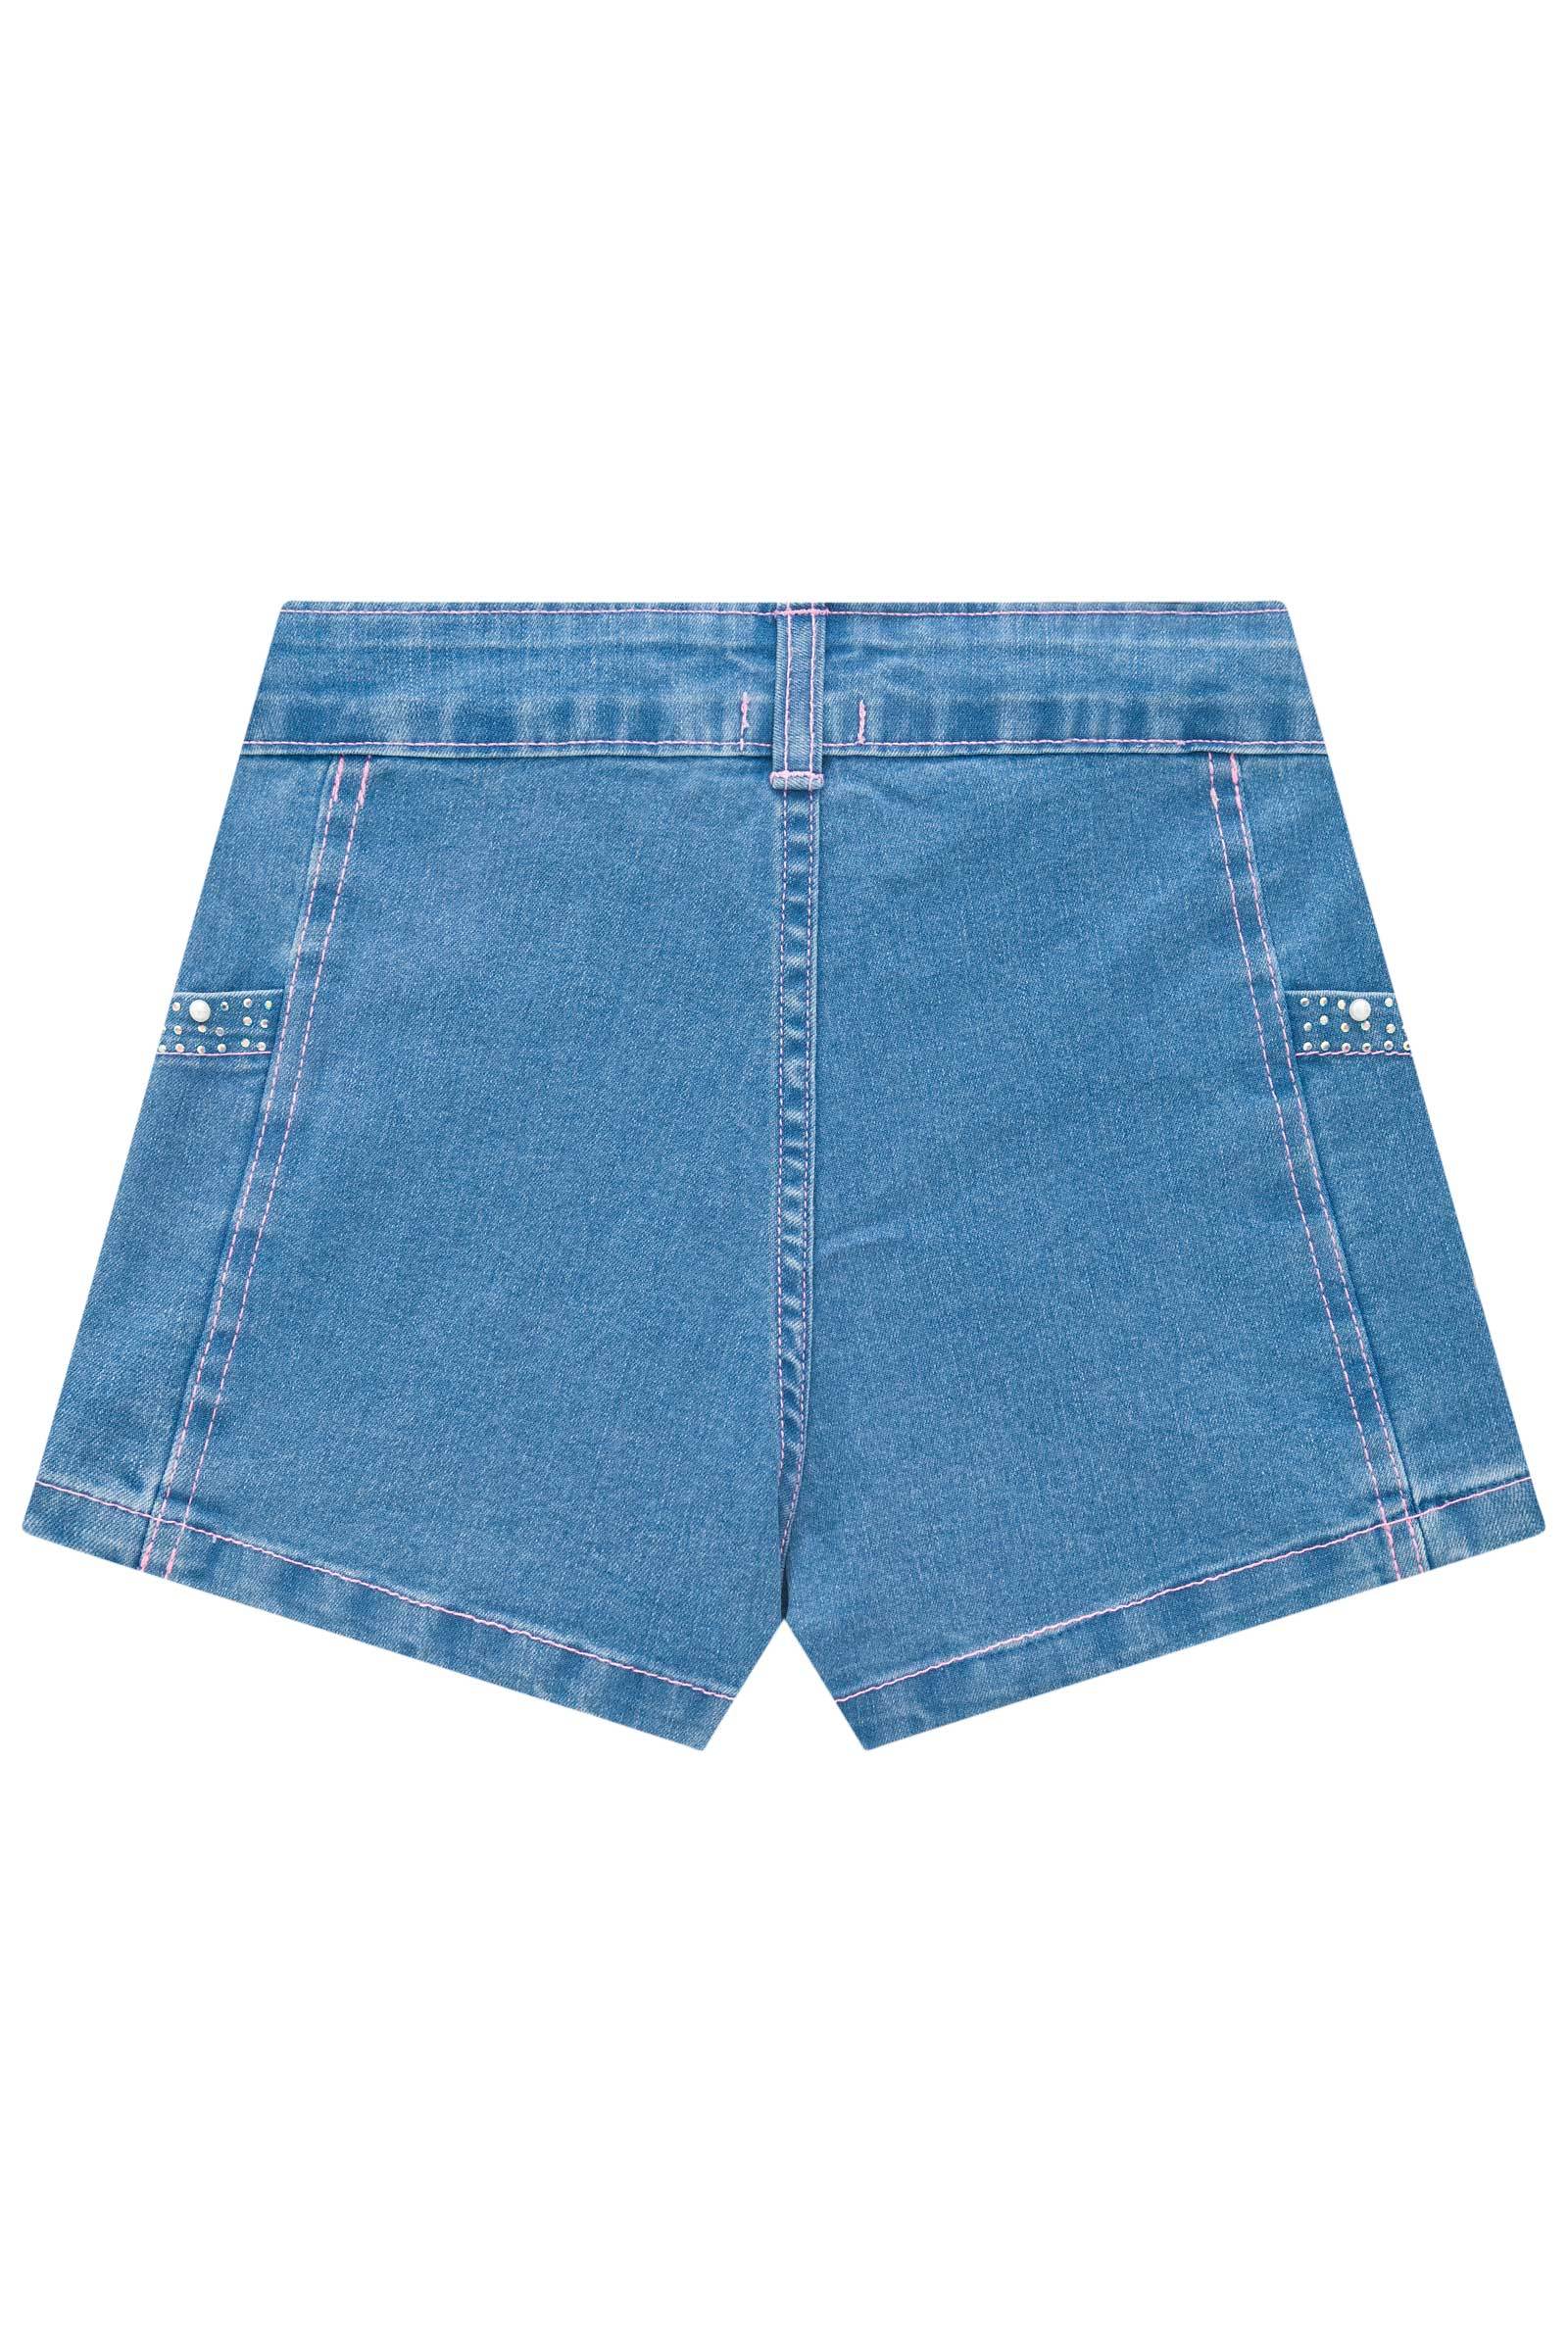 Shorts em Jeans Bellini com Elastano 74786 Infanti